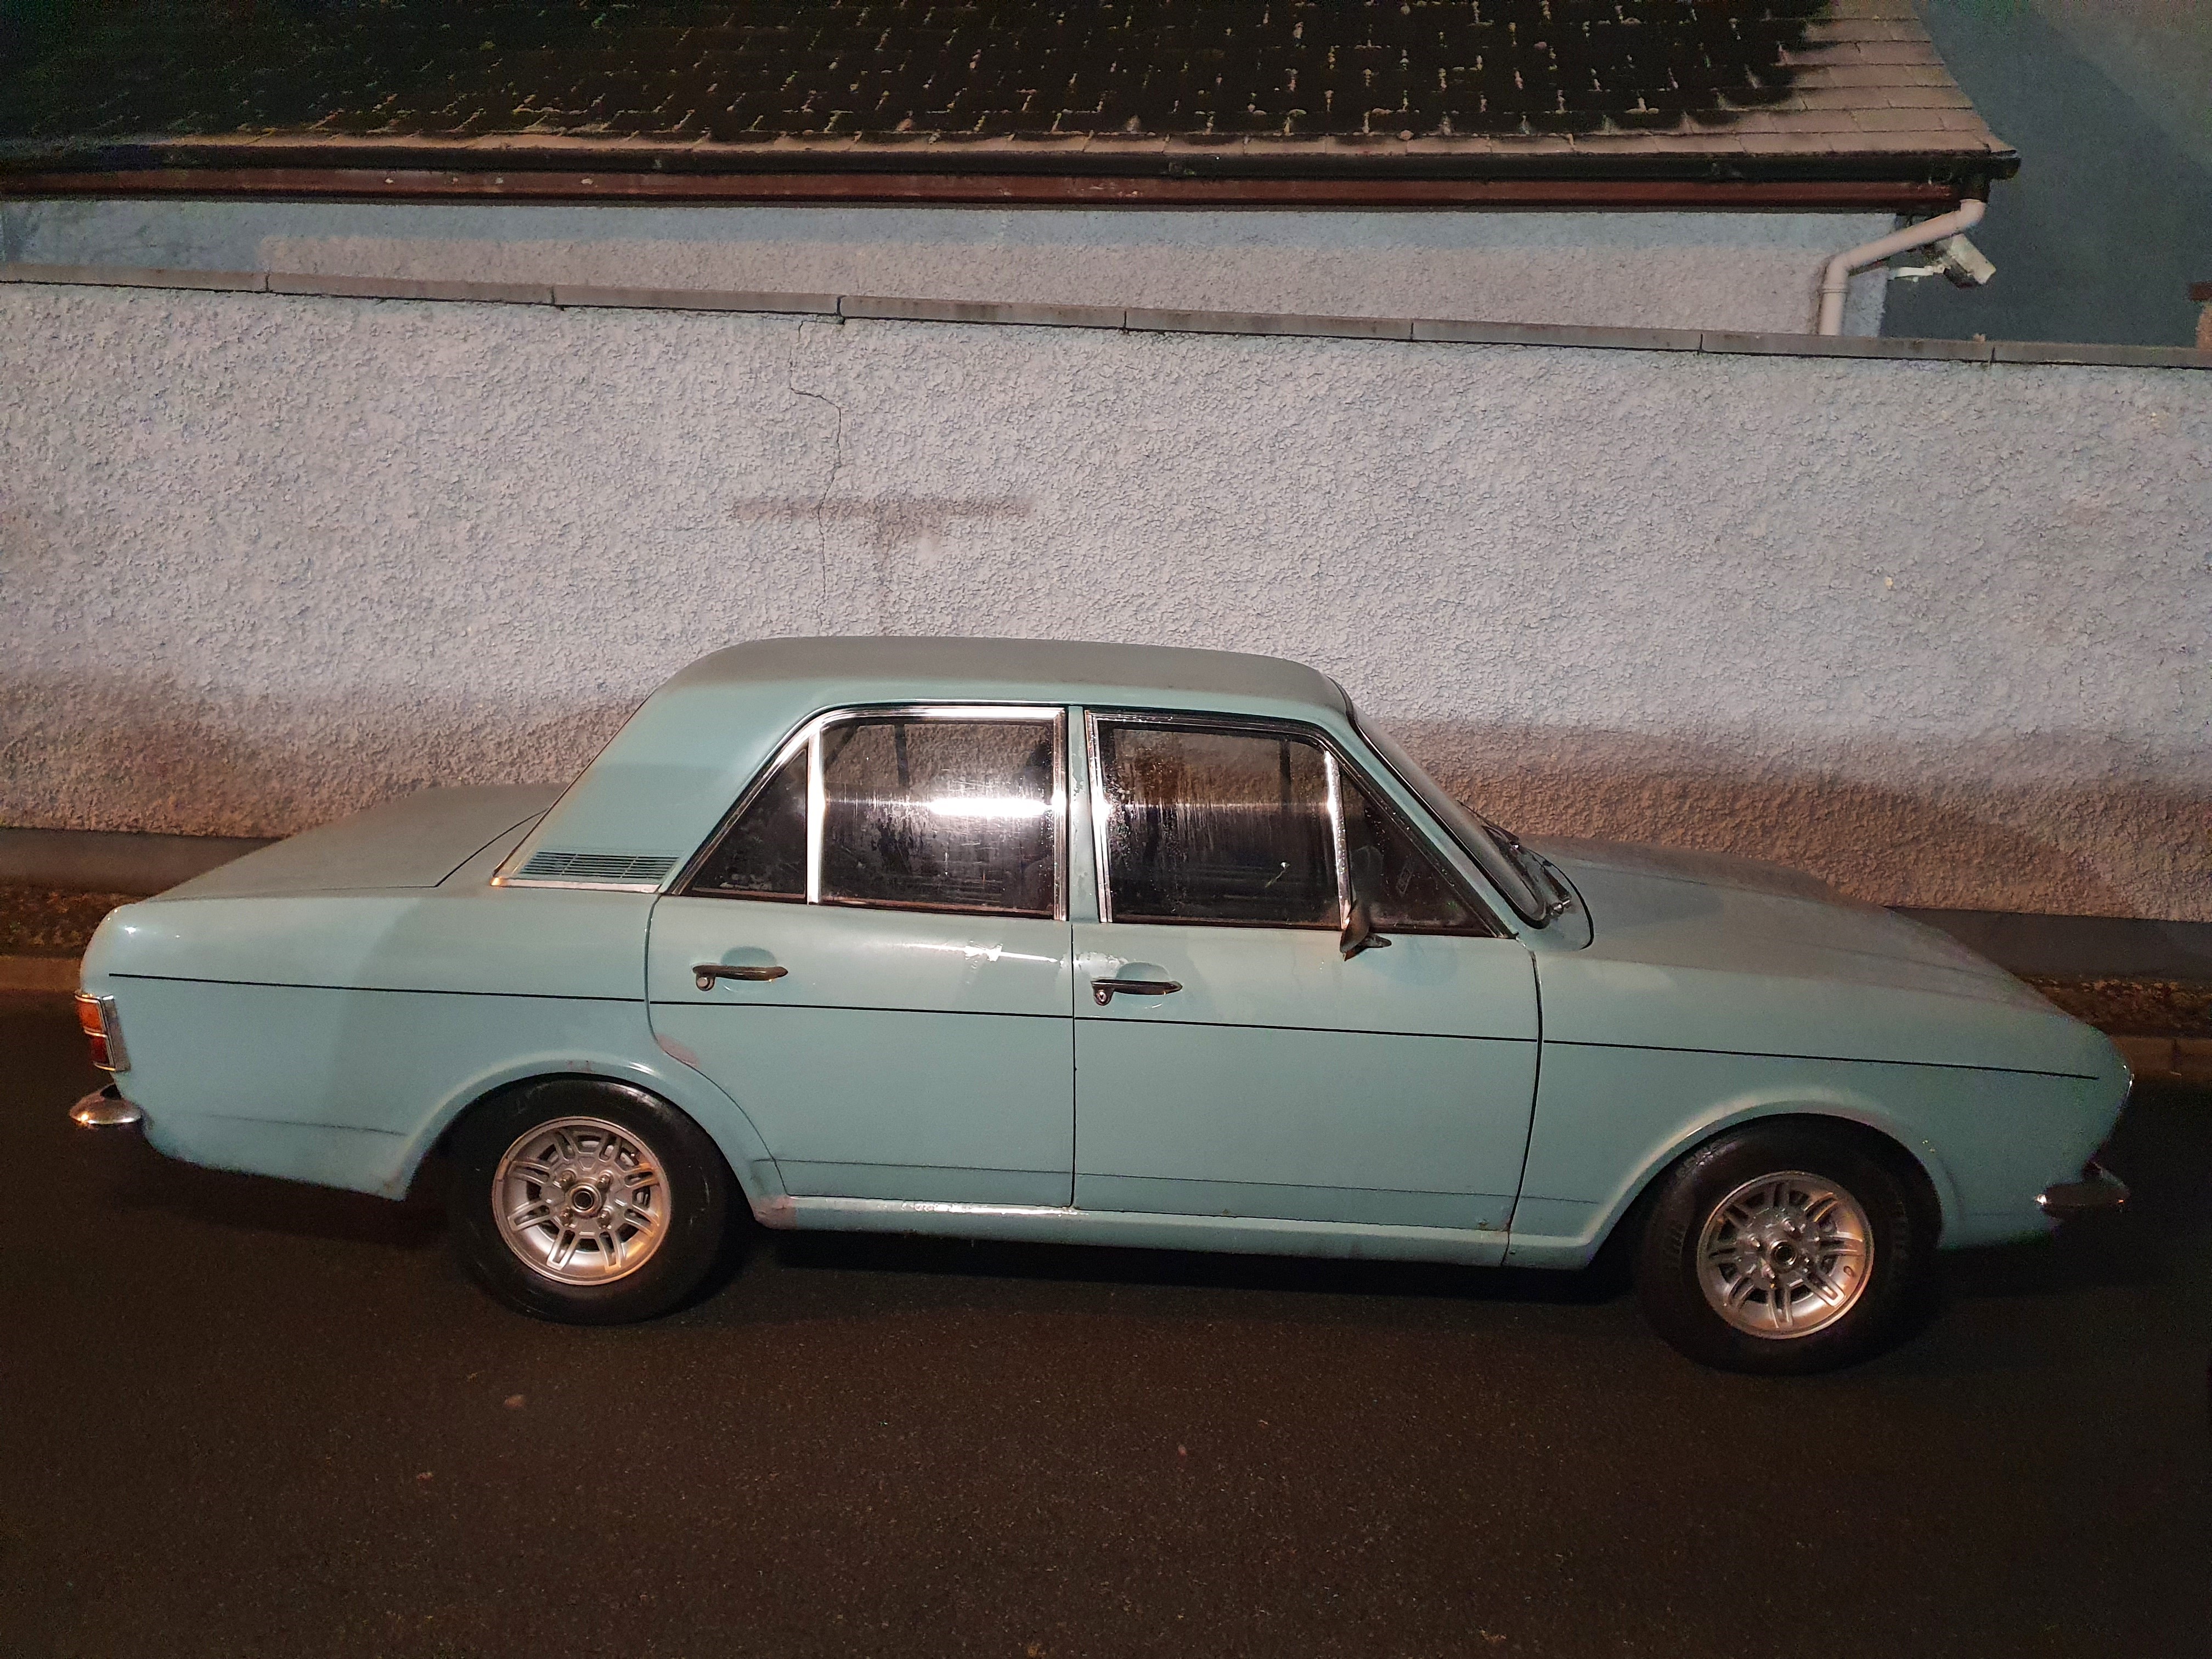 Blue Ford Cortina (Similar Car)